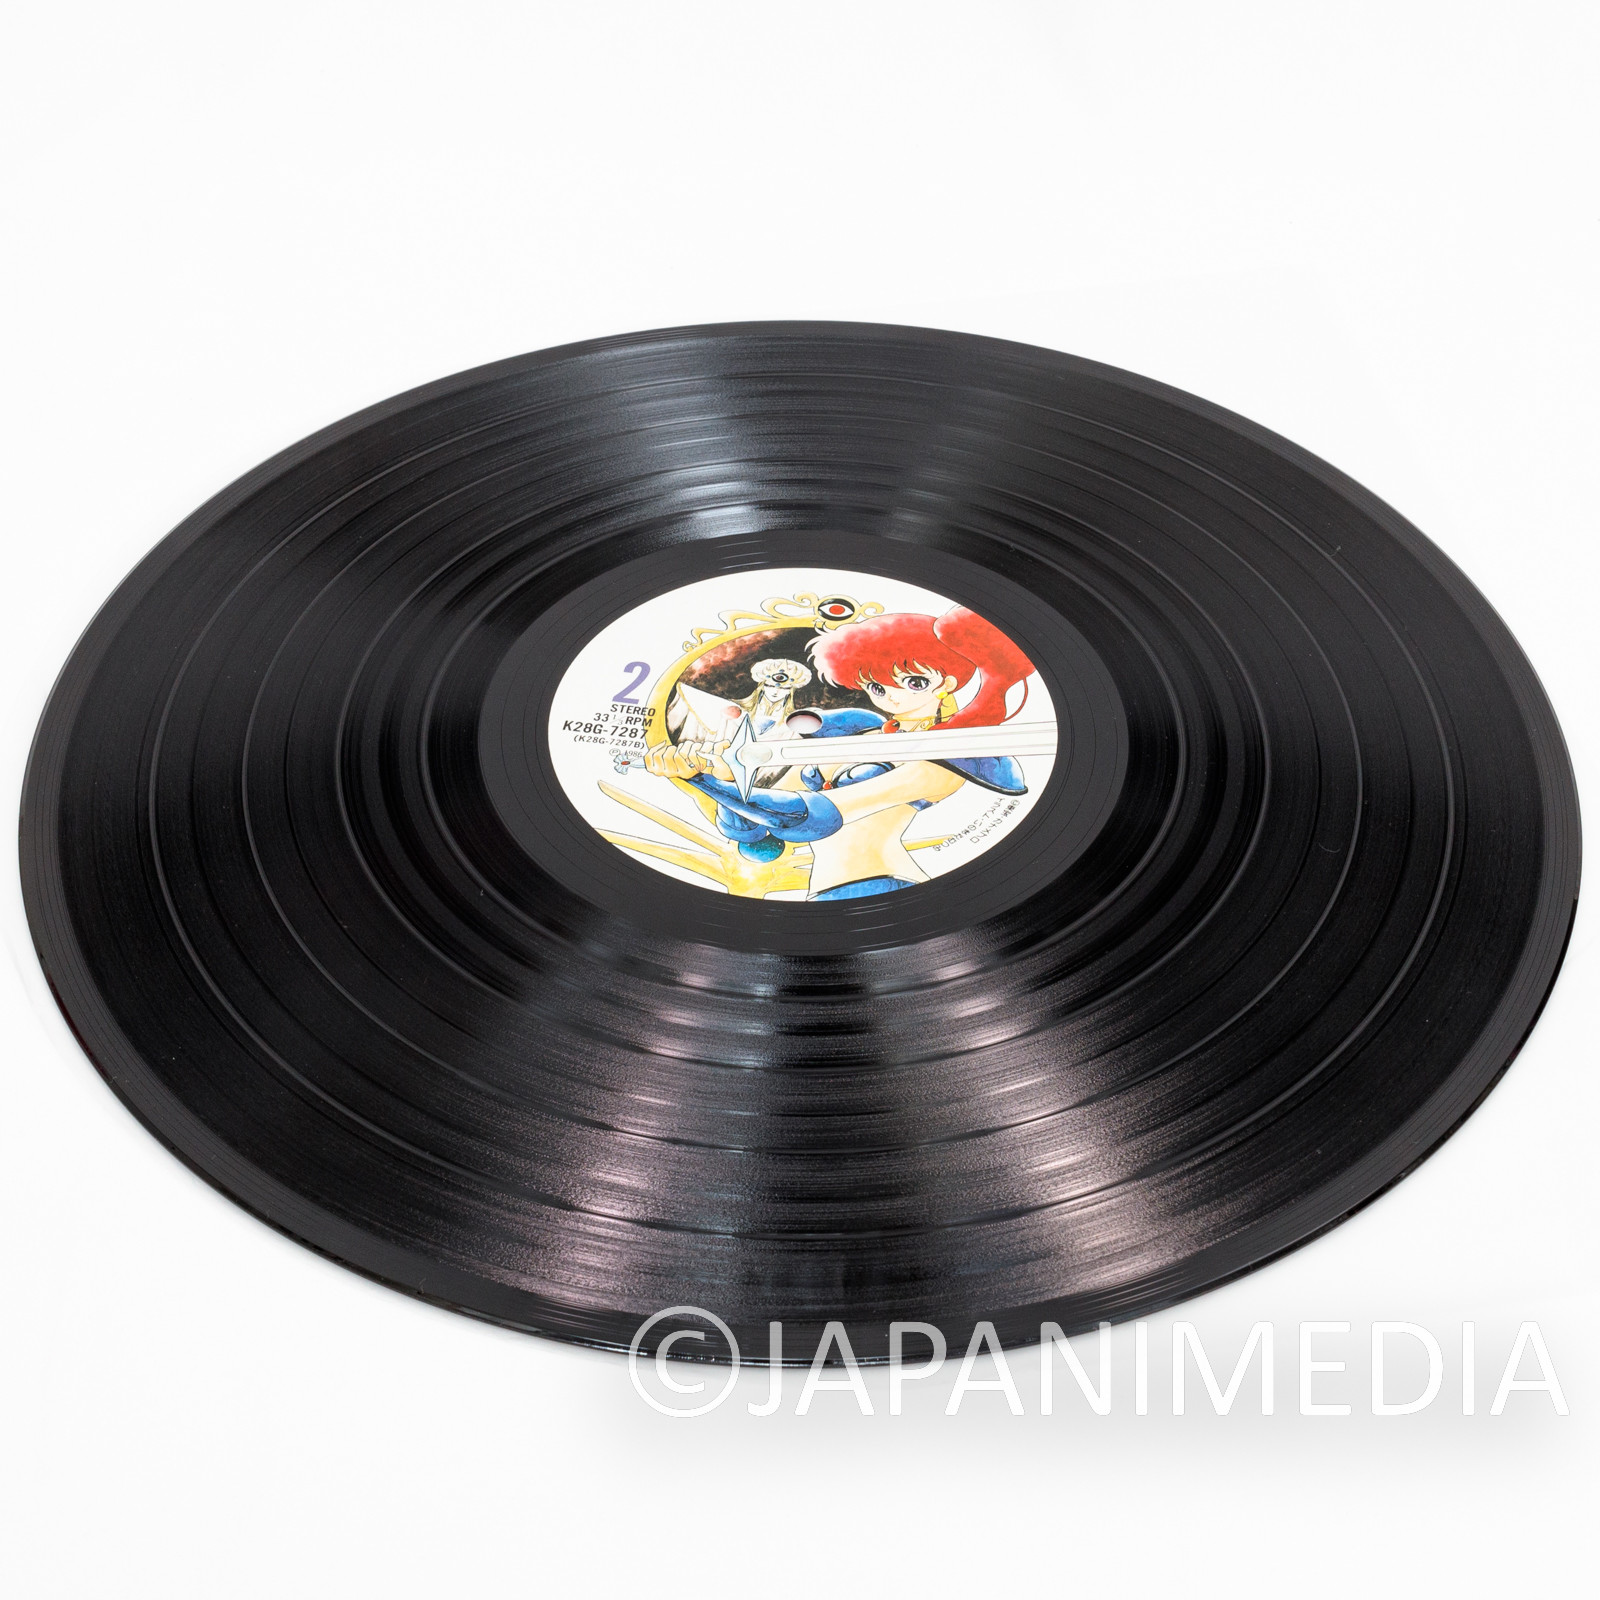 Leda: The Fantastic Adventure of Yohko II Drama&Music LP Vinyl Record K25G-7287 /Shiro Sagisu